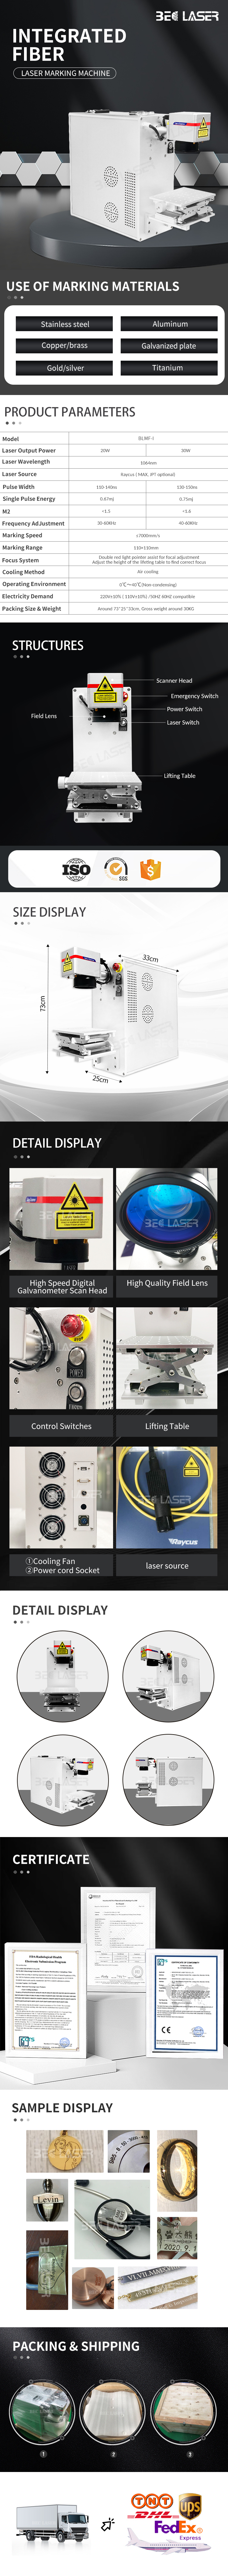 lntegrated-Fiber-Laser-Marking-Machine